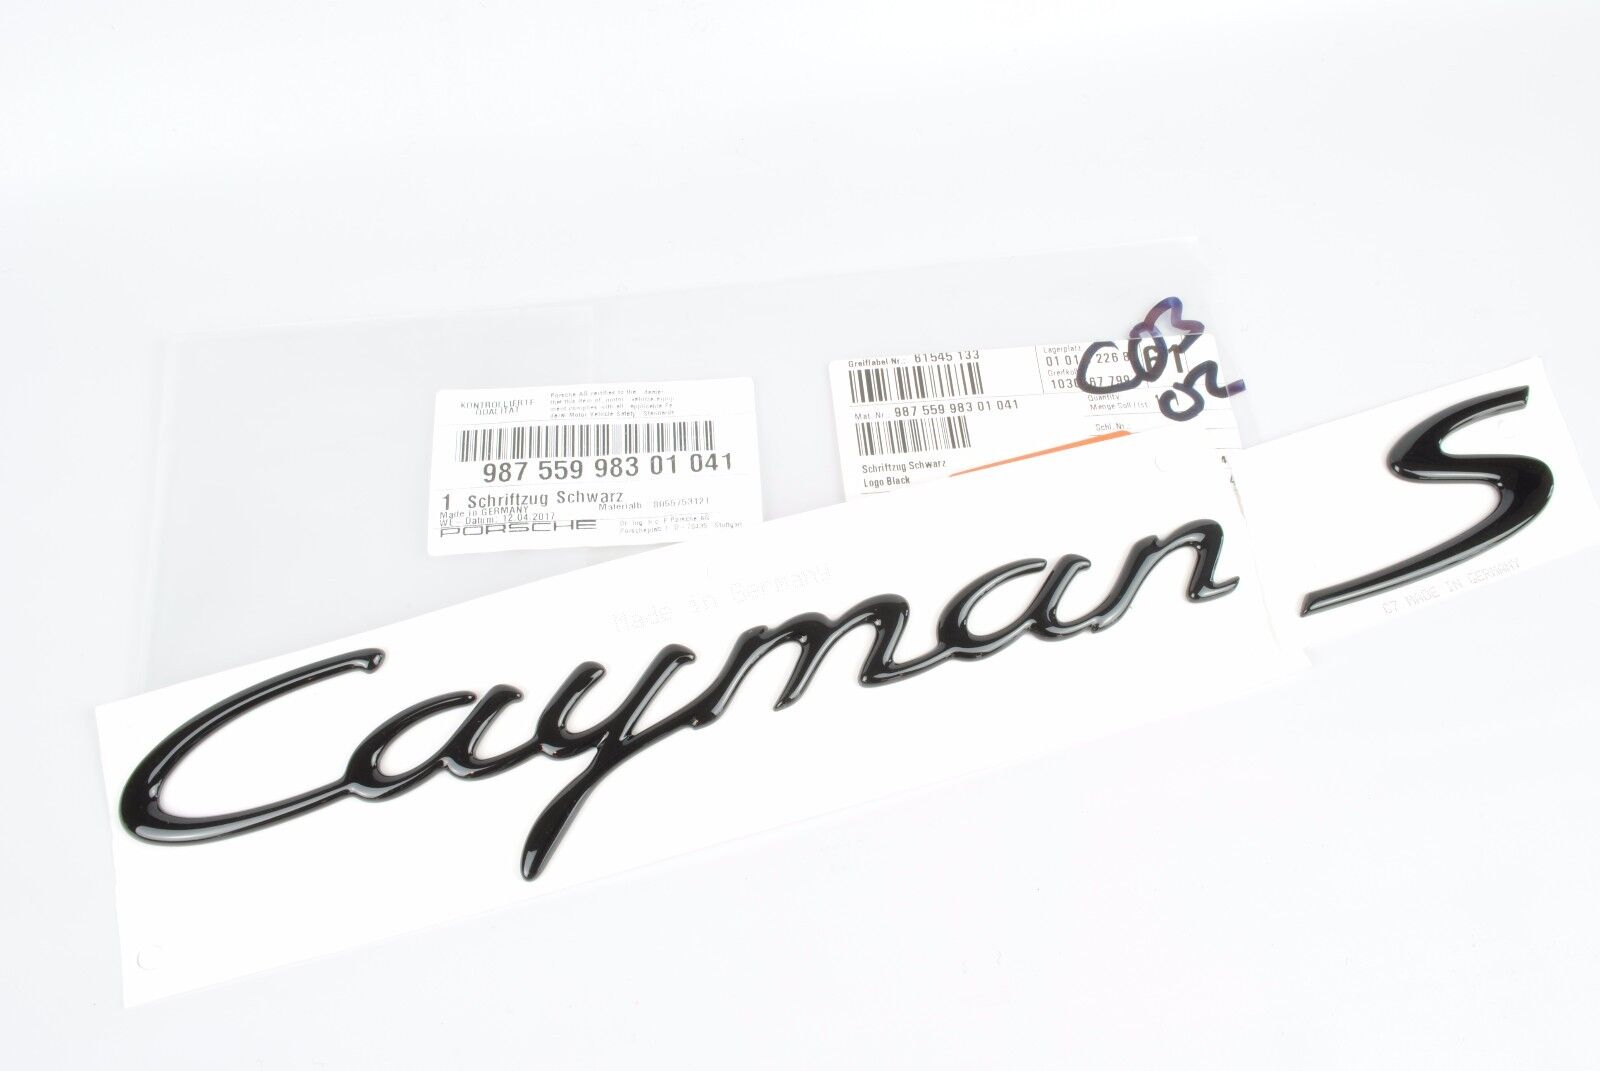 Genuine Porsche Cayman S Trunk Script Emblem 987 (Black) 98755998301041